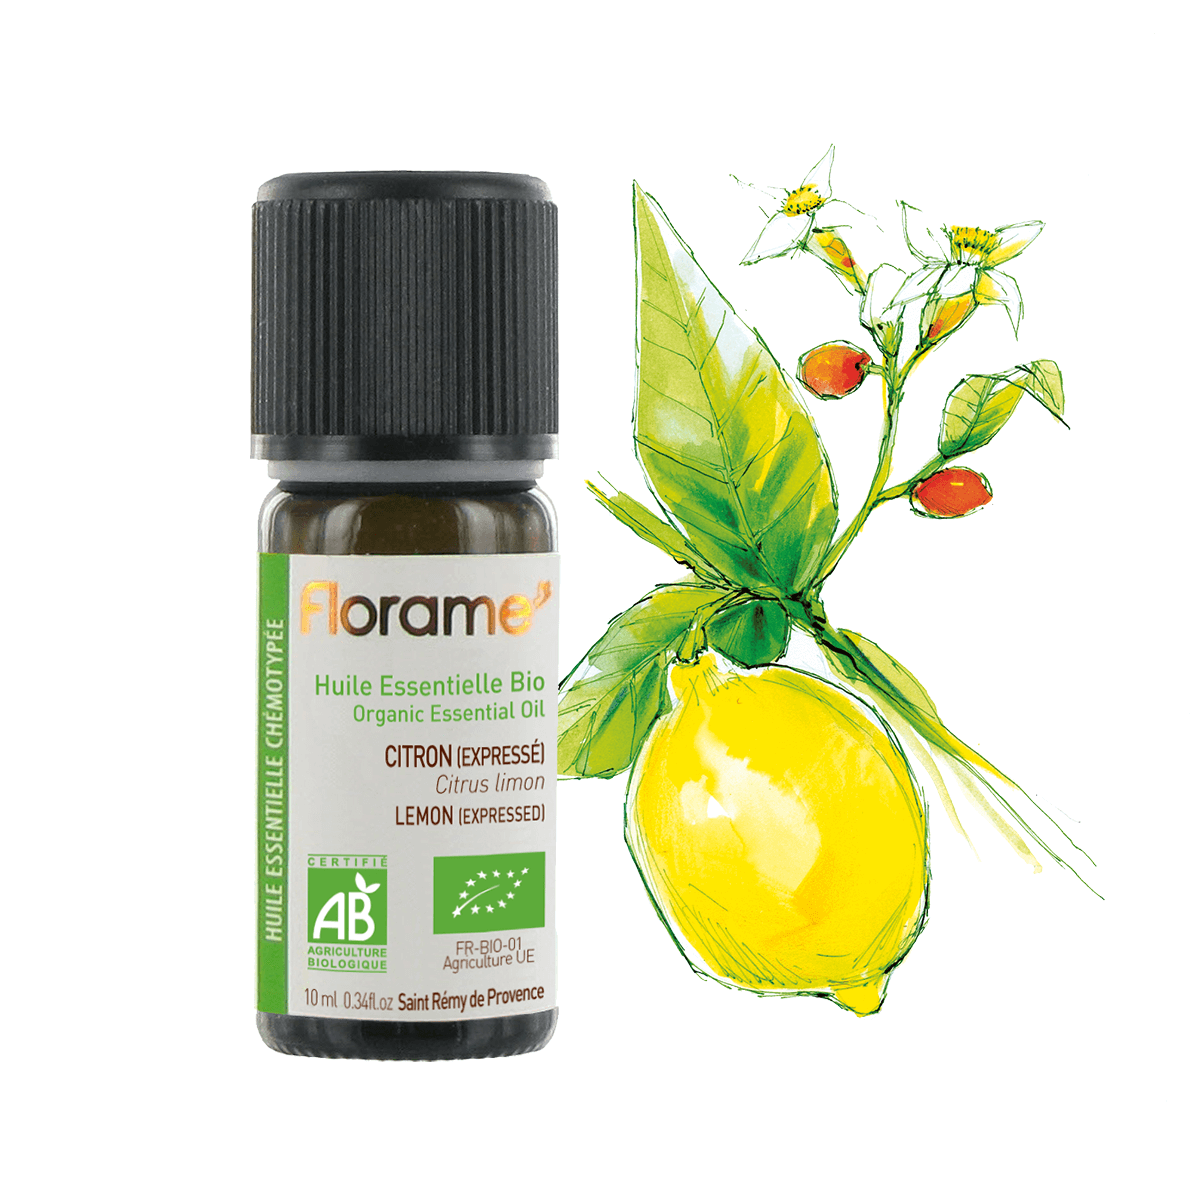 FLORAME Organic Essential Oil - Lemon (Expressed) 有機檸檬精油 [10ml] - MINT Organics